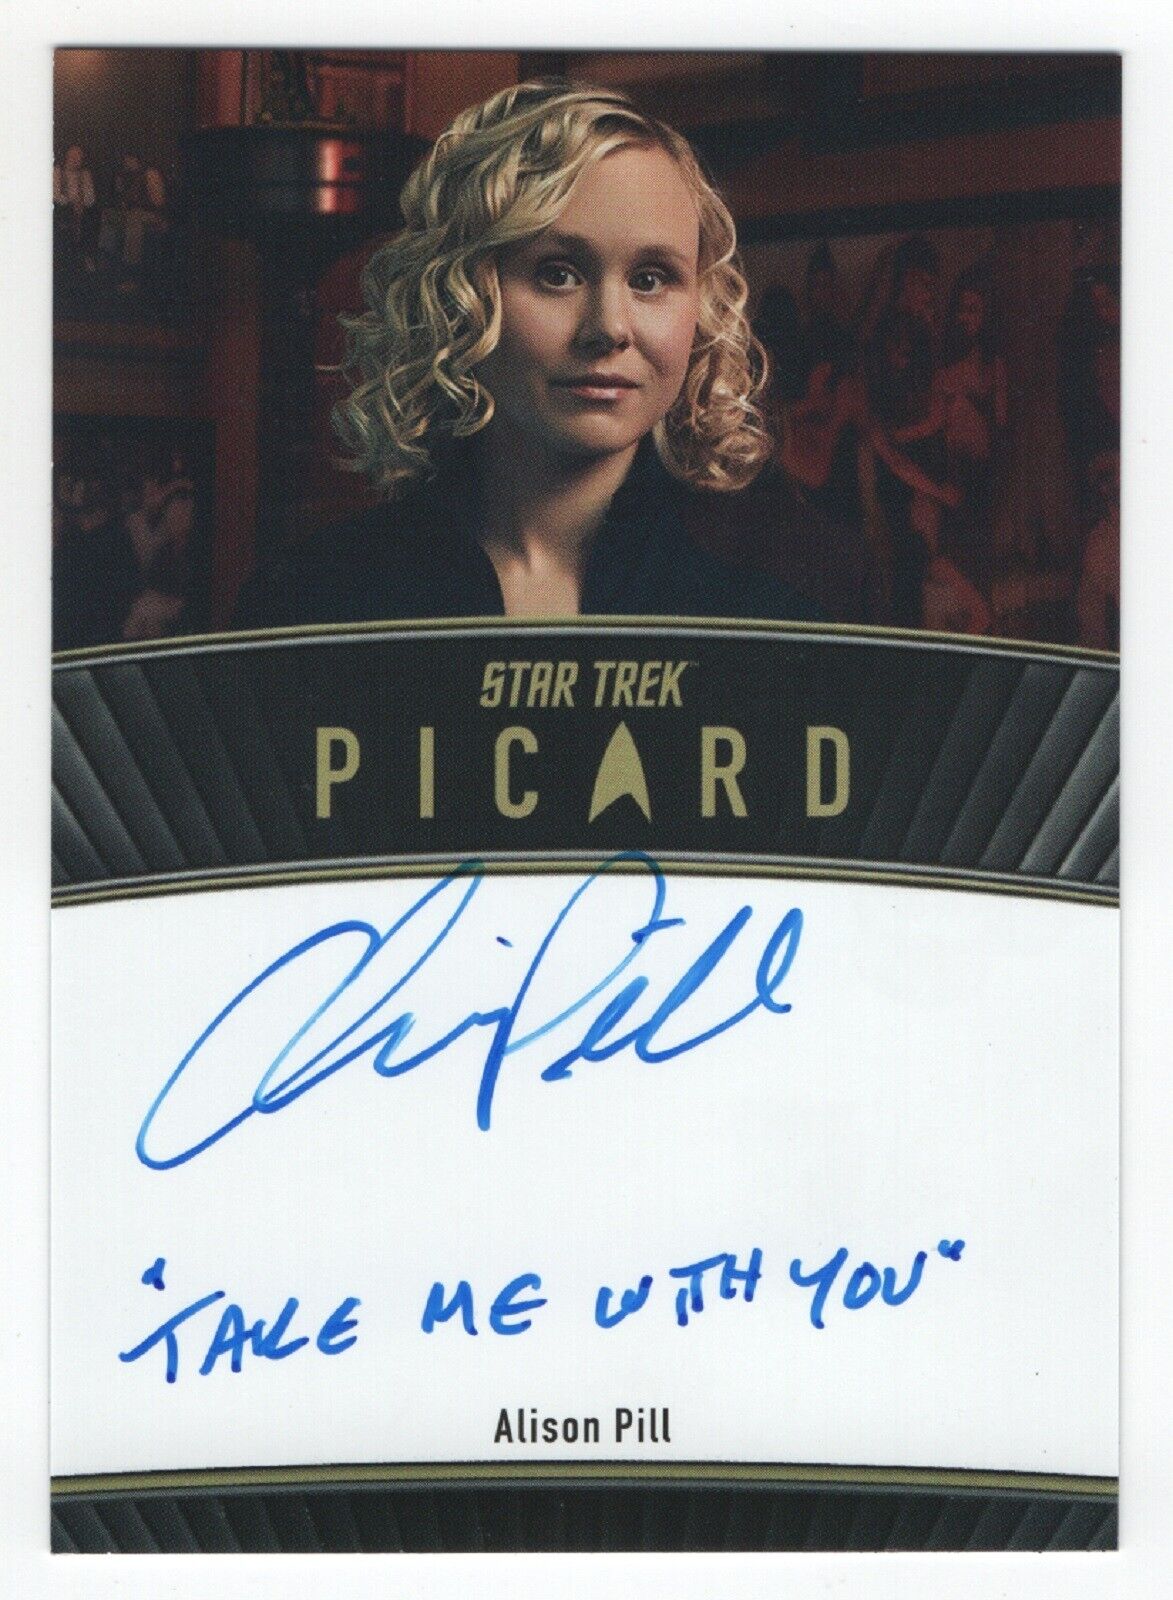 Star Trek Picard seasons 2 & 3 Alison Pill as Dr. Jurati Inscription auto card